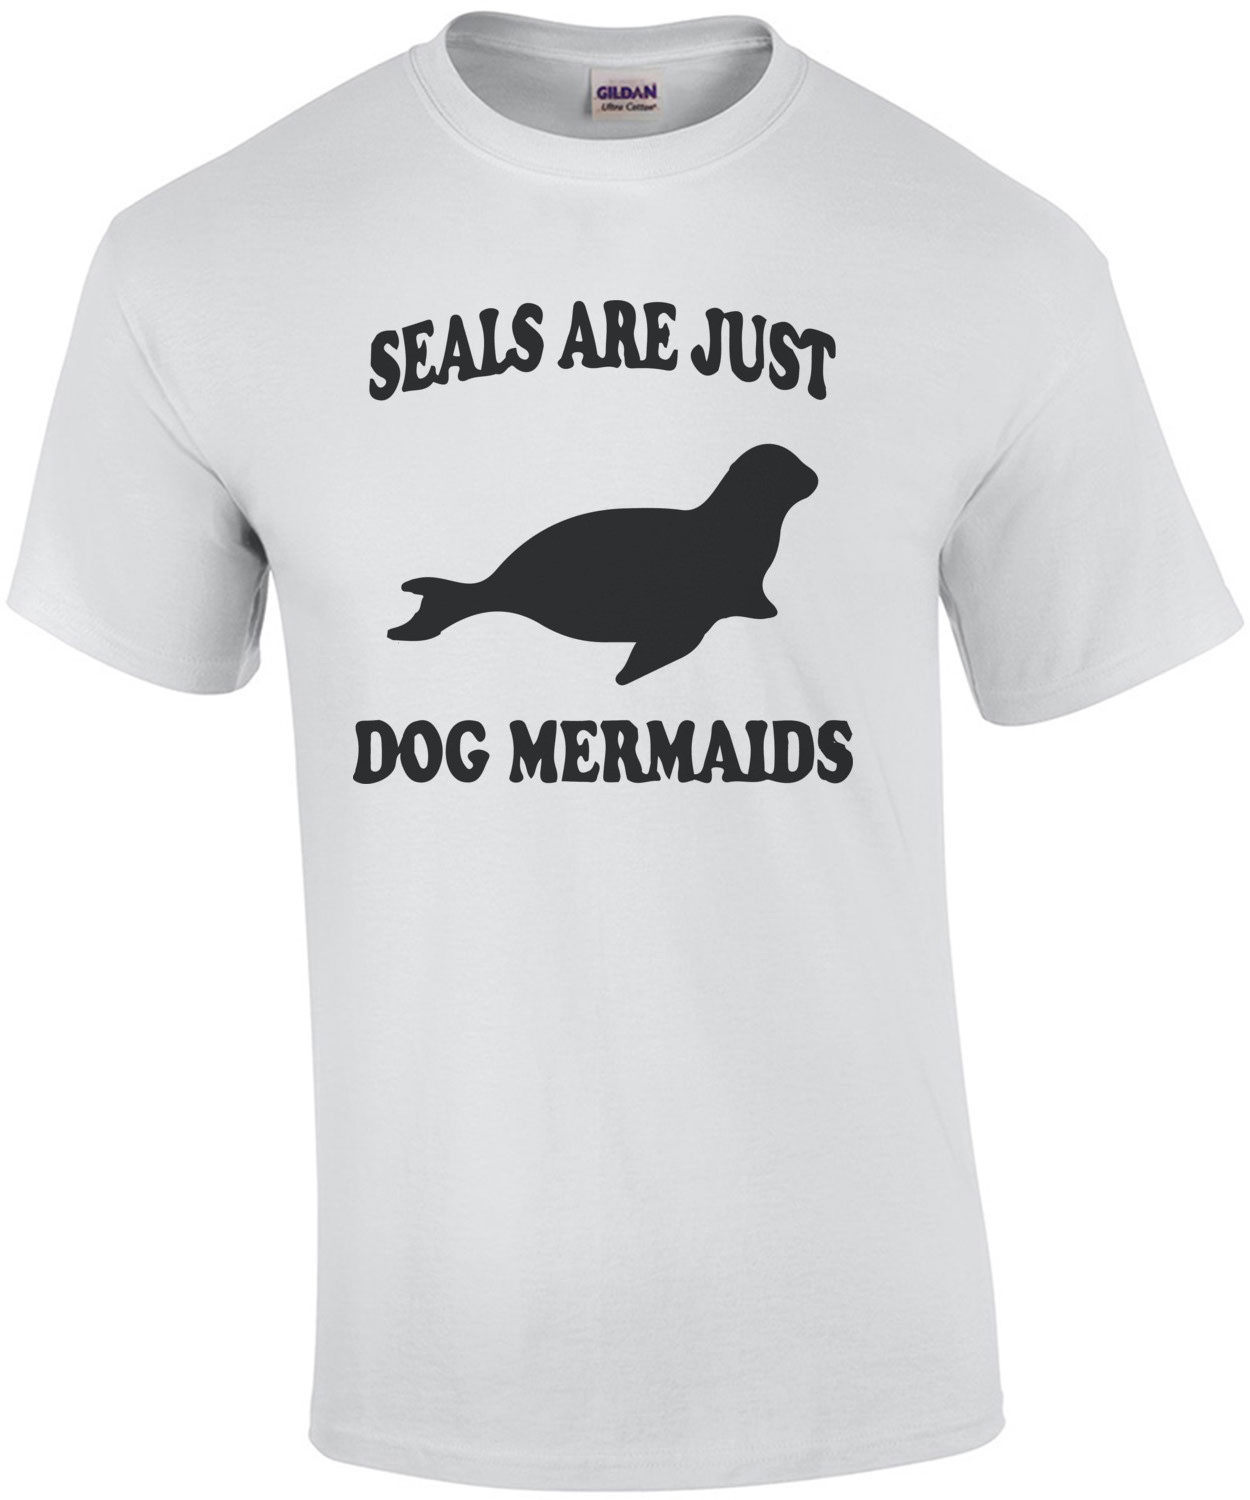 Seals are just dog mermaids T-Shirt